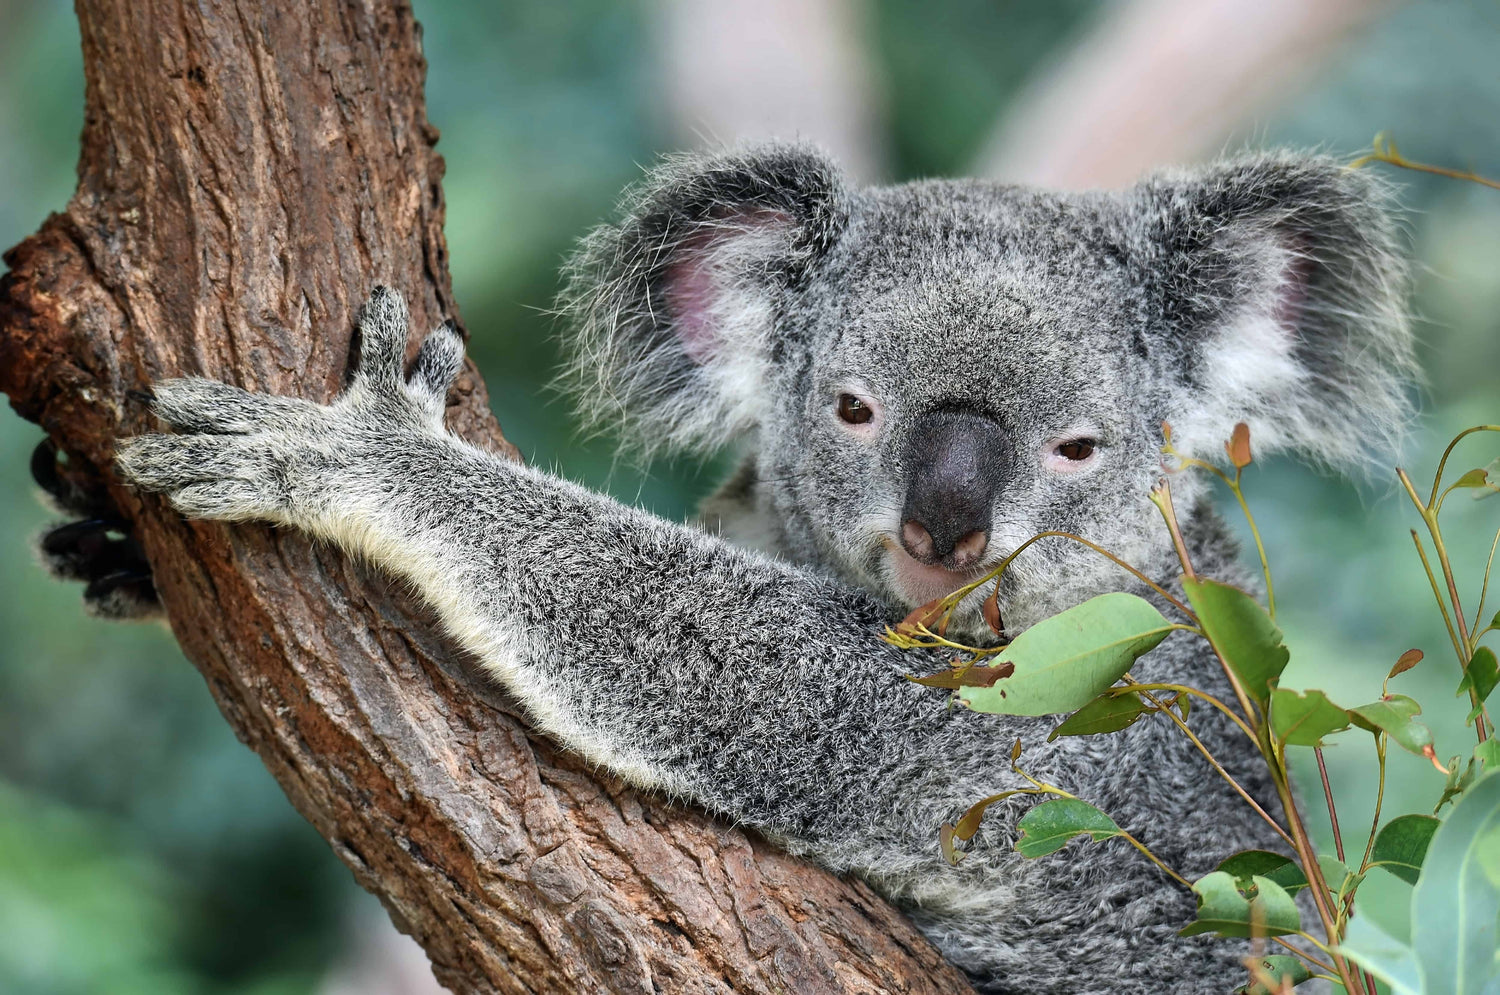 Cute koala exploring the snö Portable Ice Bath Tub in its natural Australian habitat